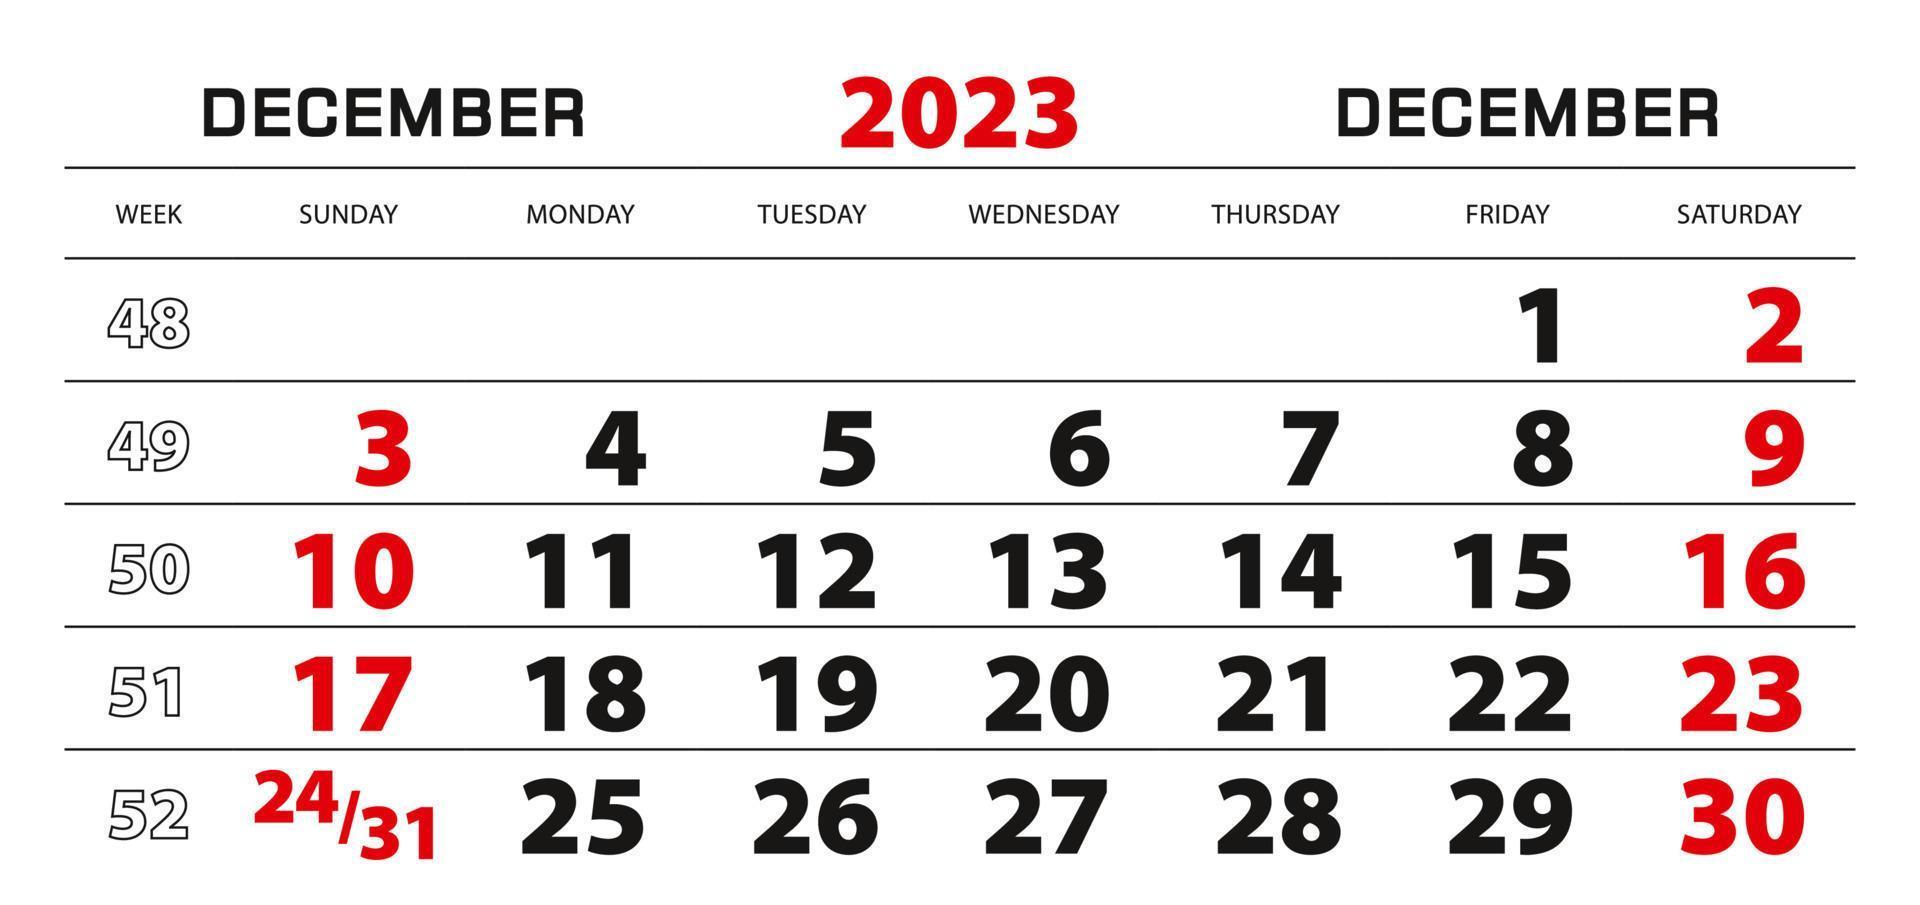 calendario de pared 2023 para diciembre, semana a partir del domingo. vector